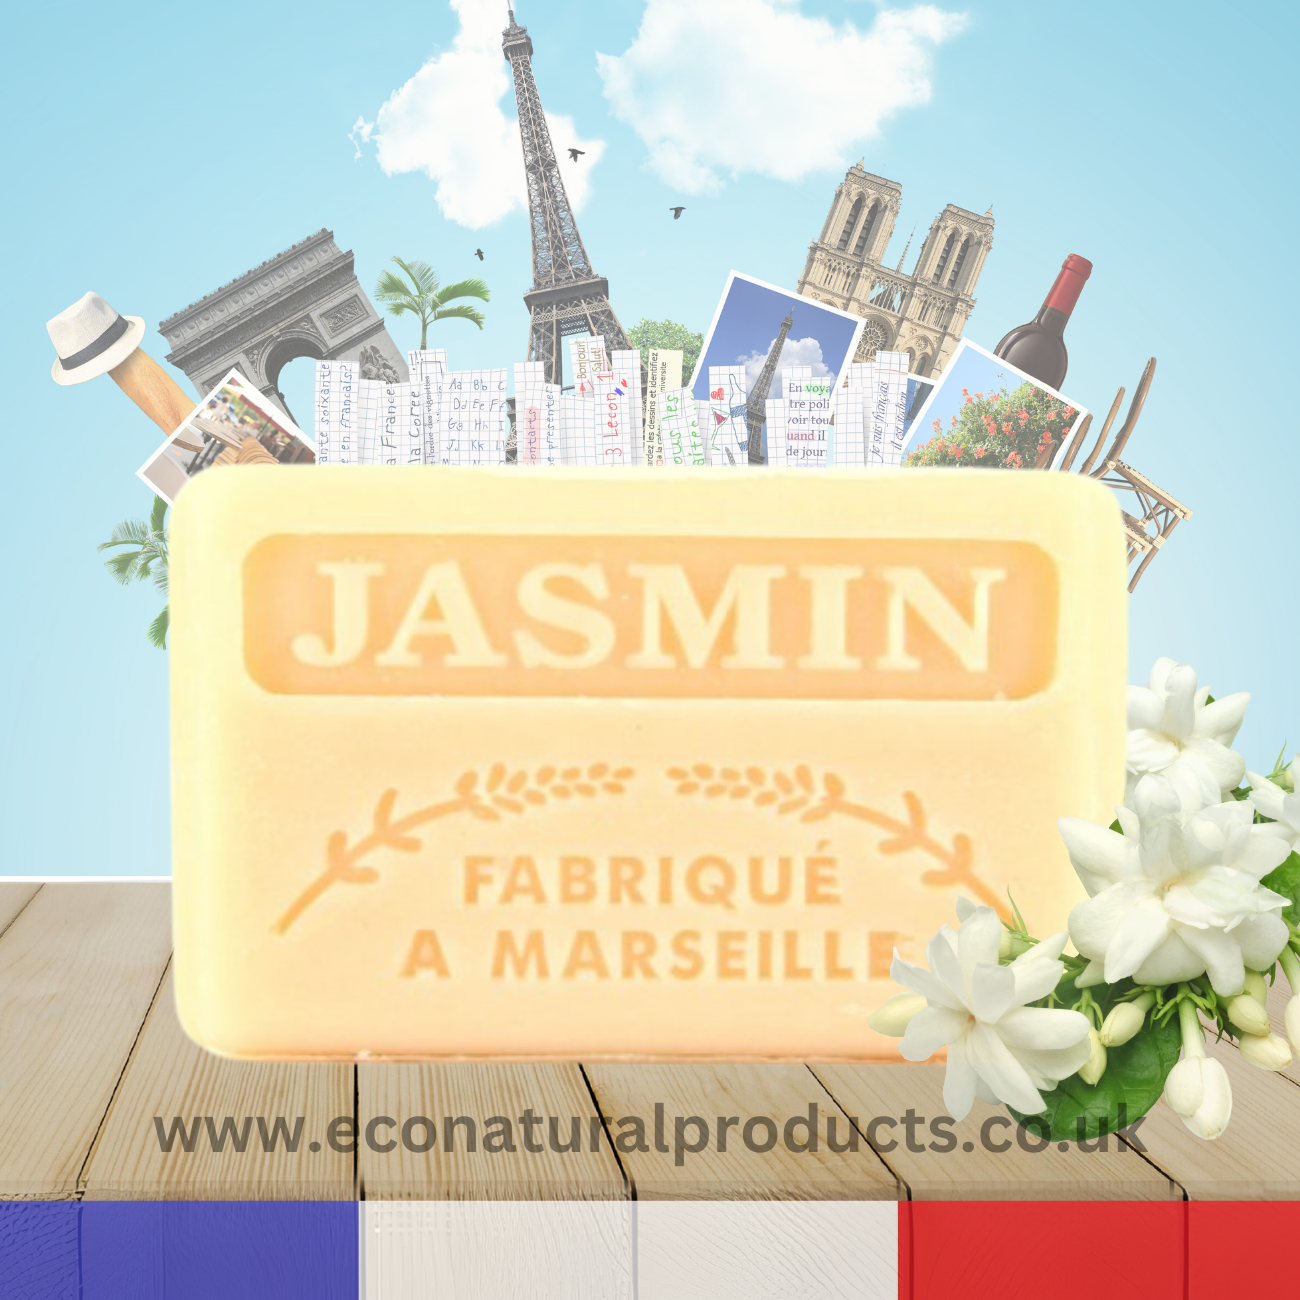 French Marseille Soap Jasmin (Jasmine) 60g